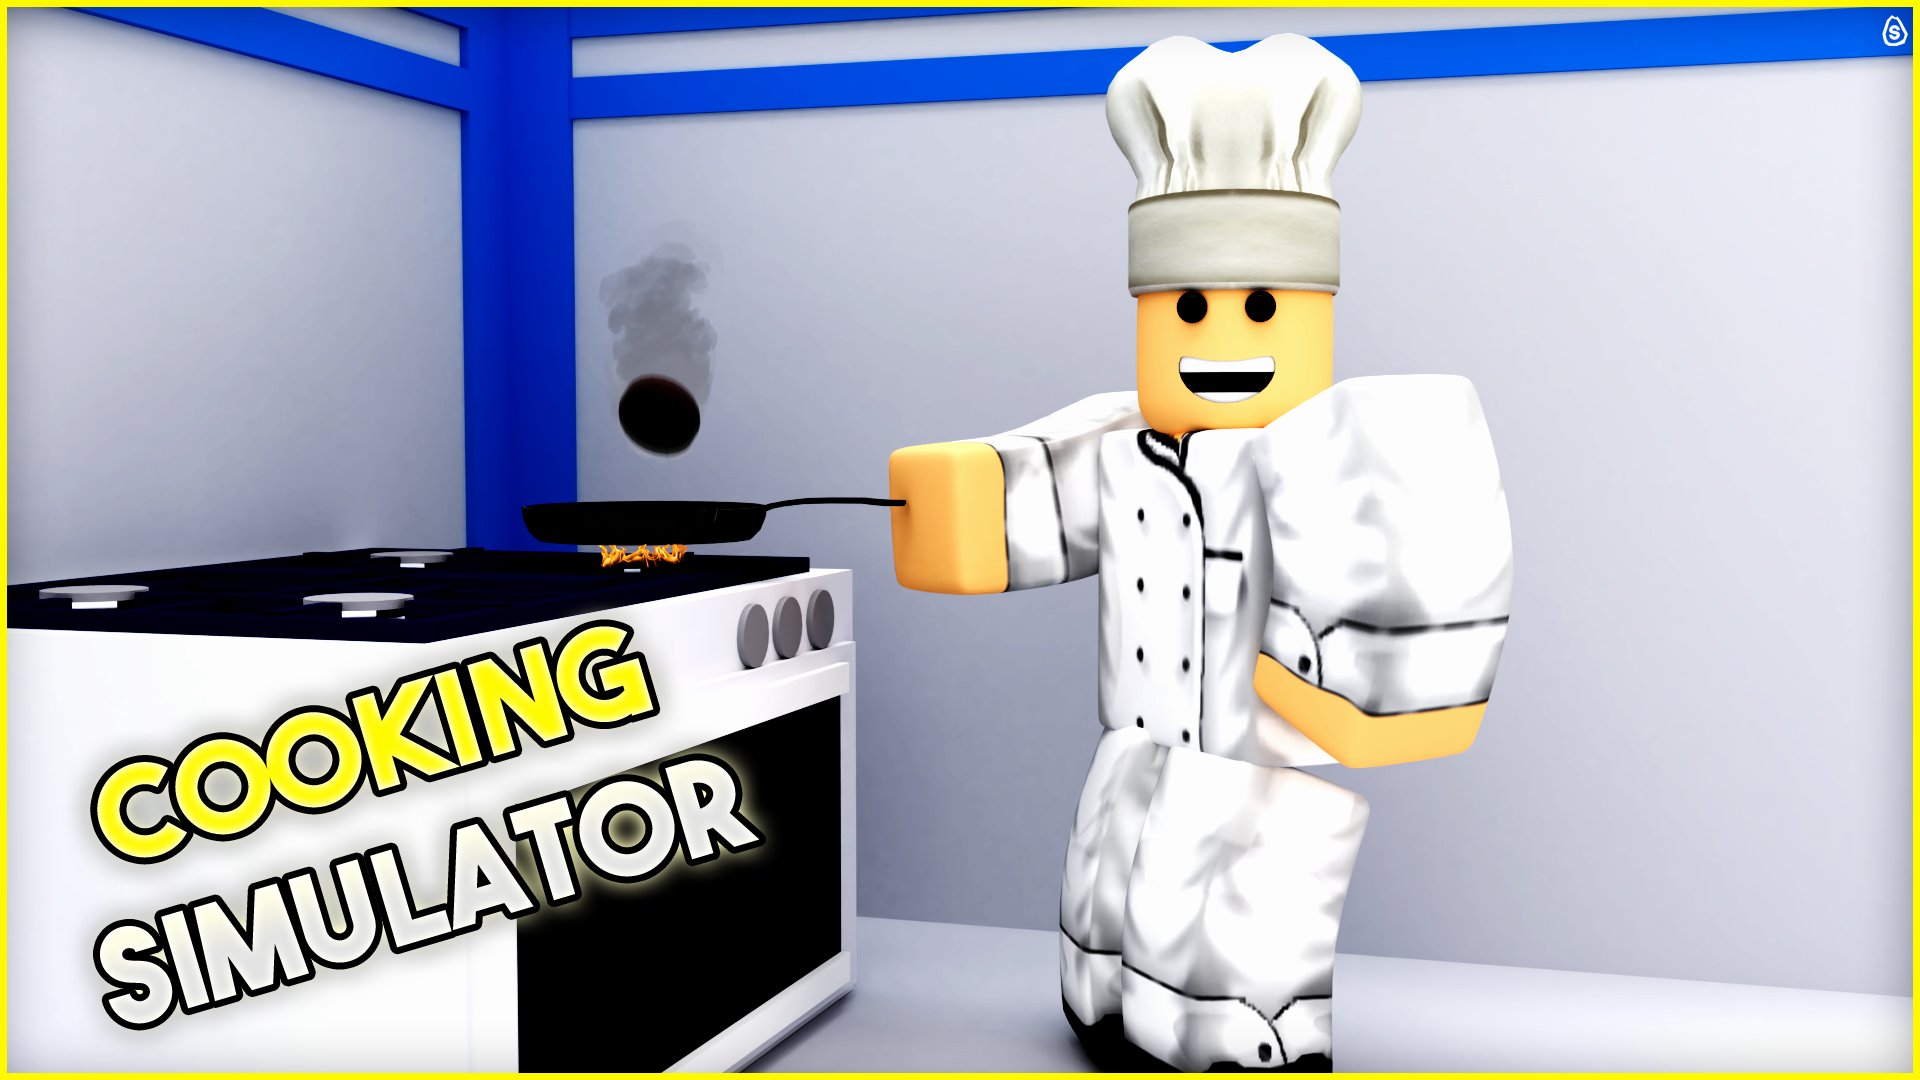 Cooking Simulator - Roblox